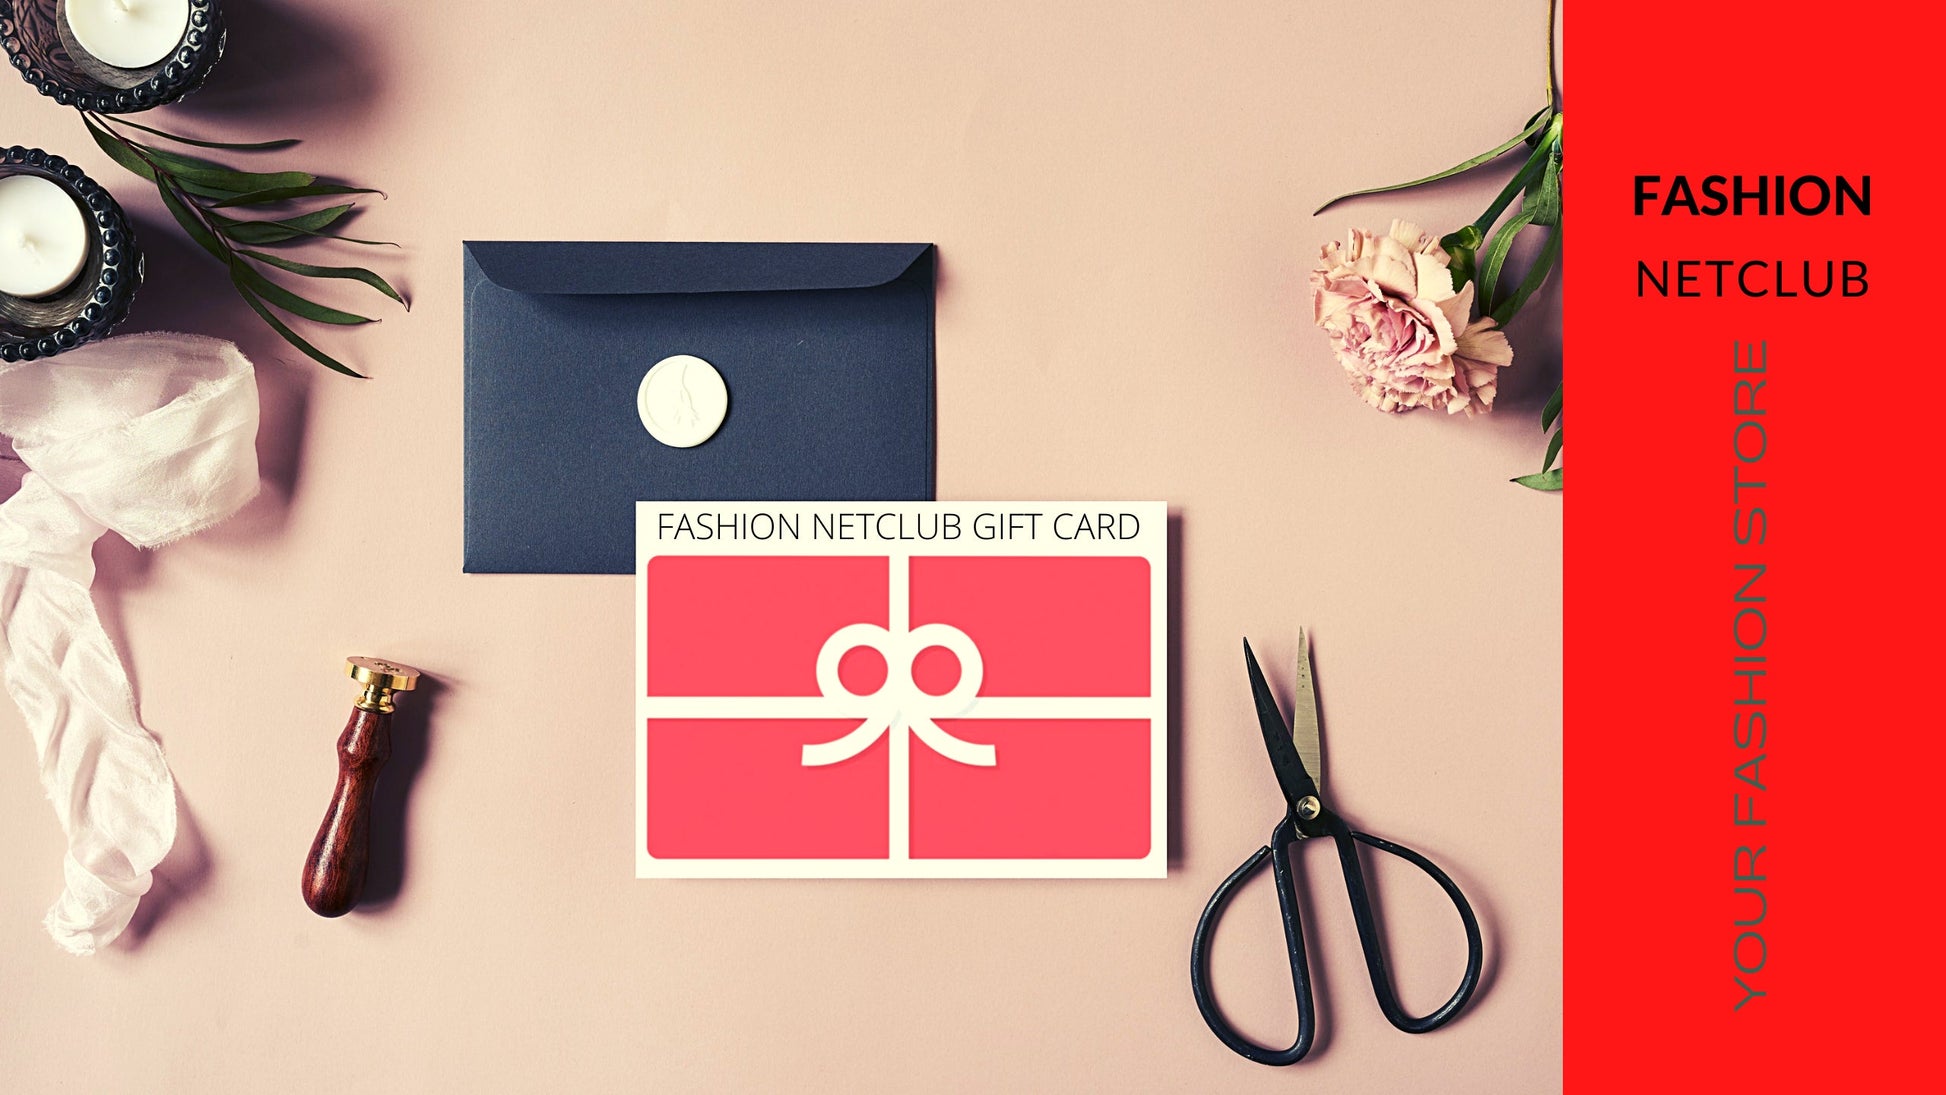 Gift Cards - Fashion NetClub Gift Card